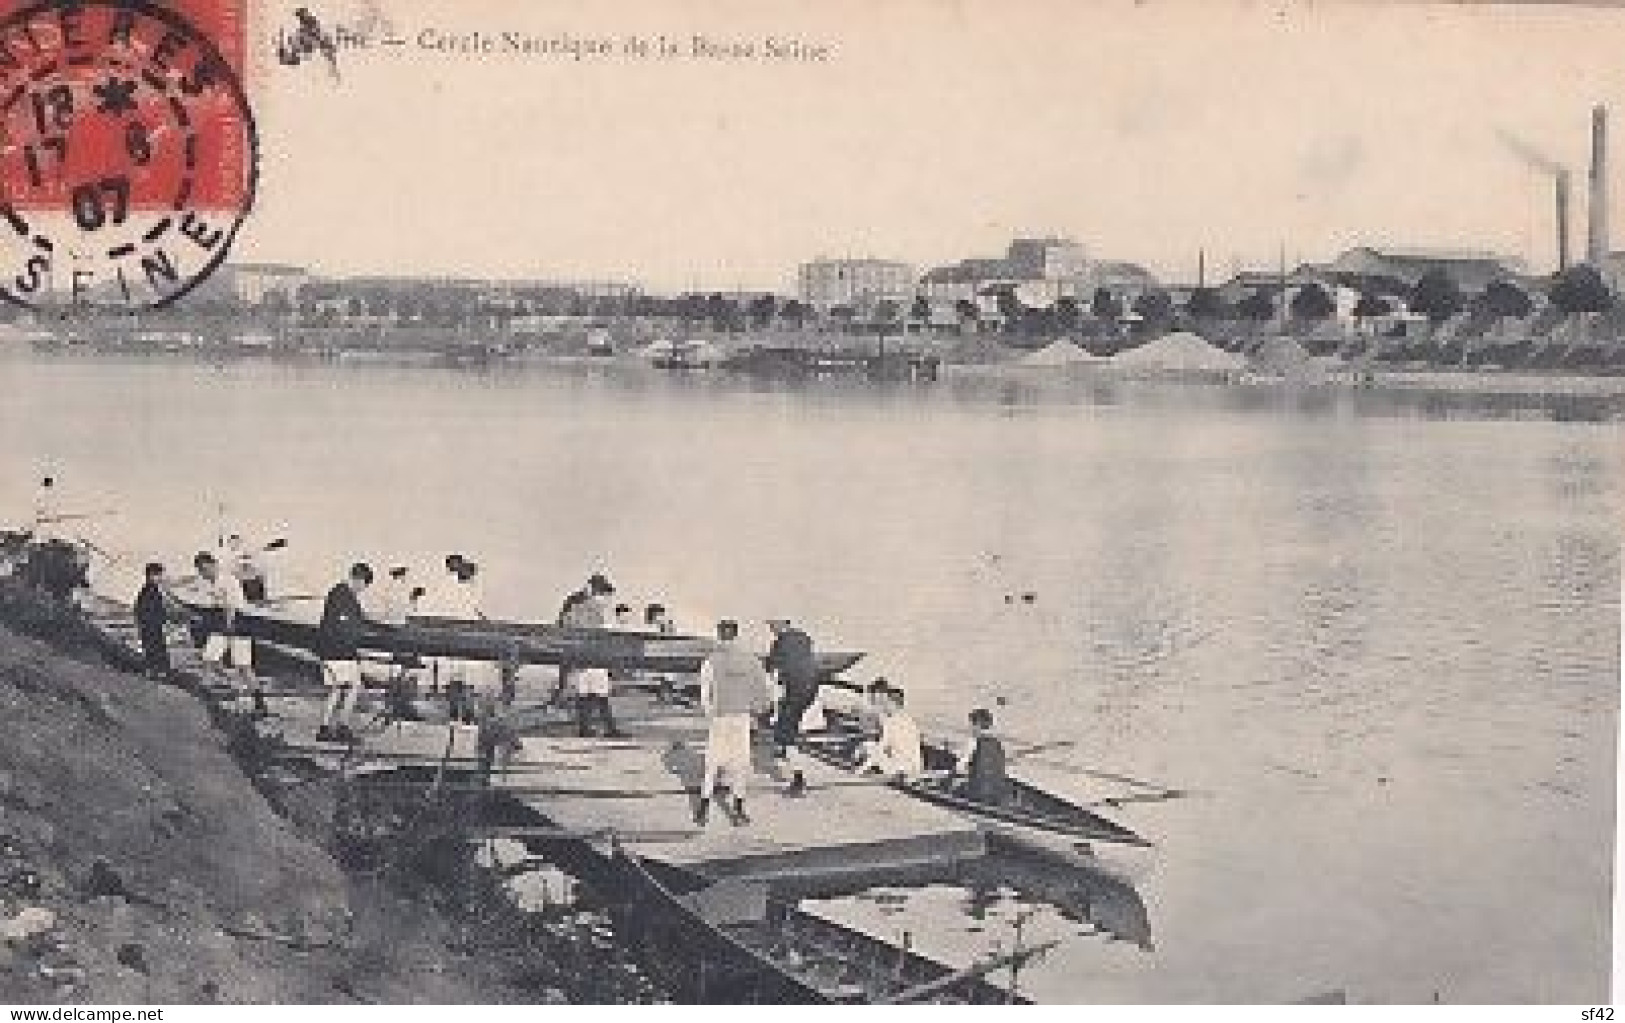 CERCLE NAUTIQUE DE LA BASSE SEINE         PONTON AVIRON - Rowing